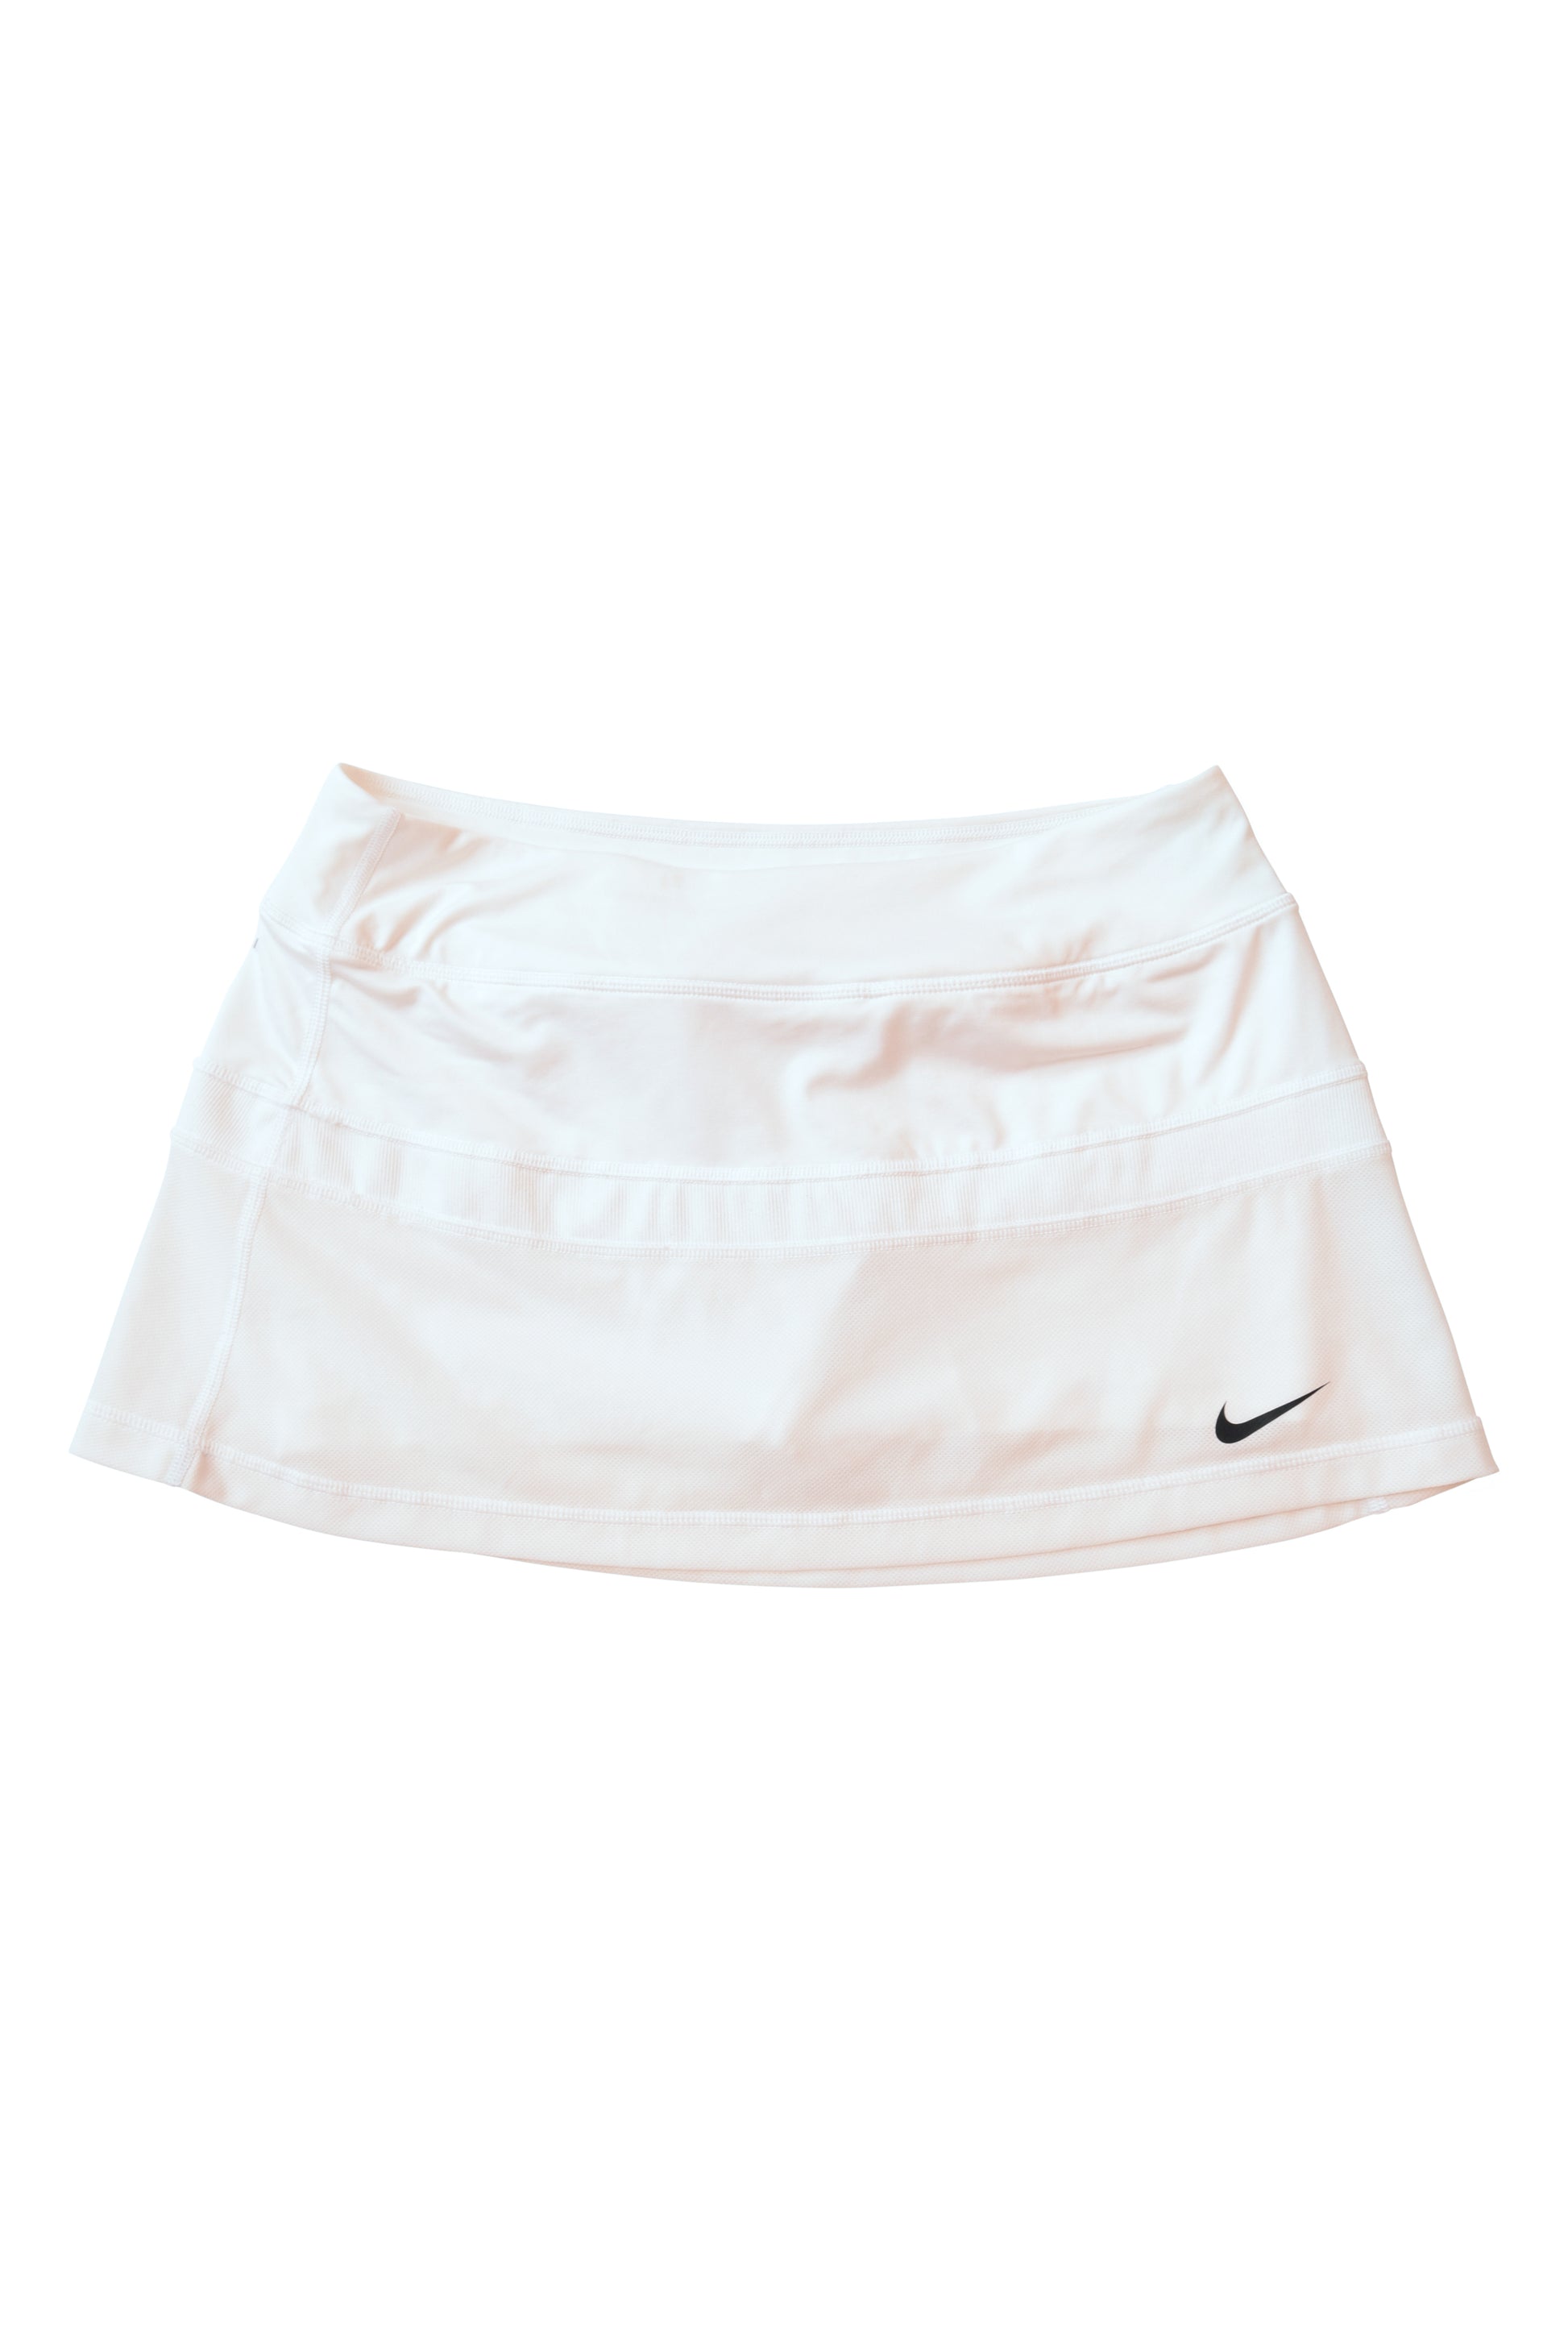 Nike Tennis Skirt Dri Fit Size M White